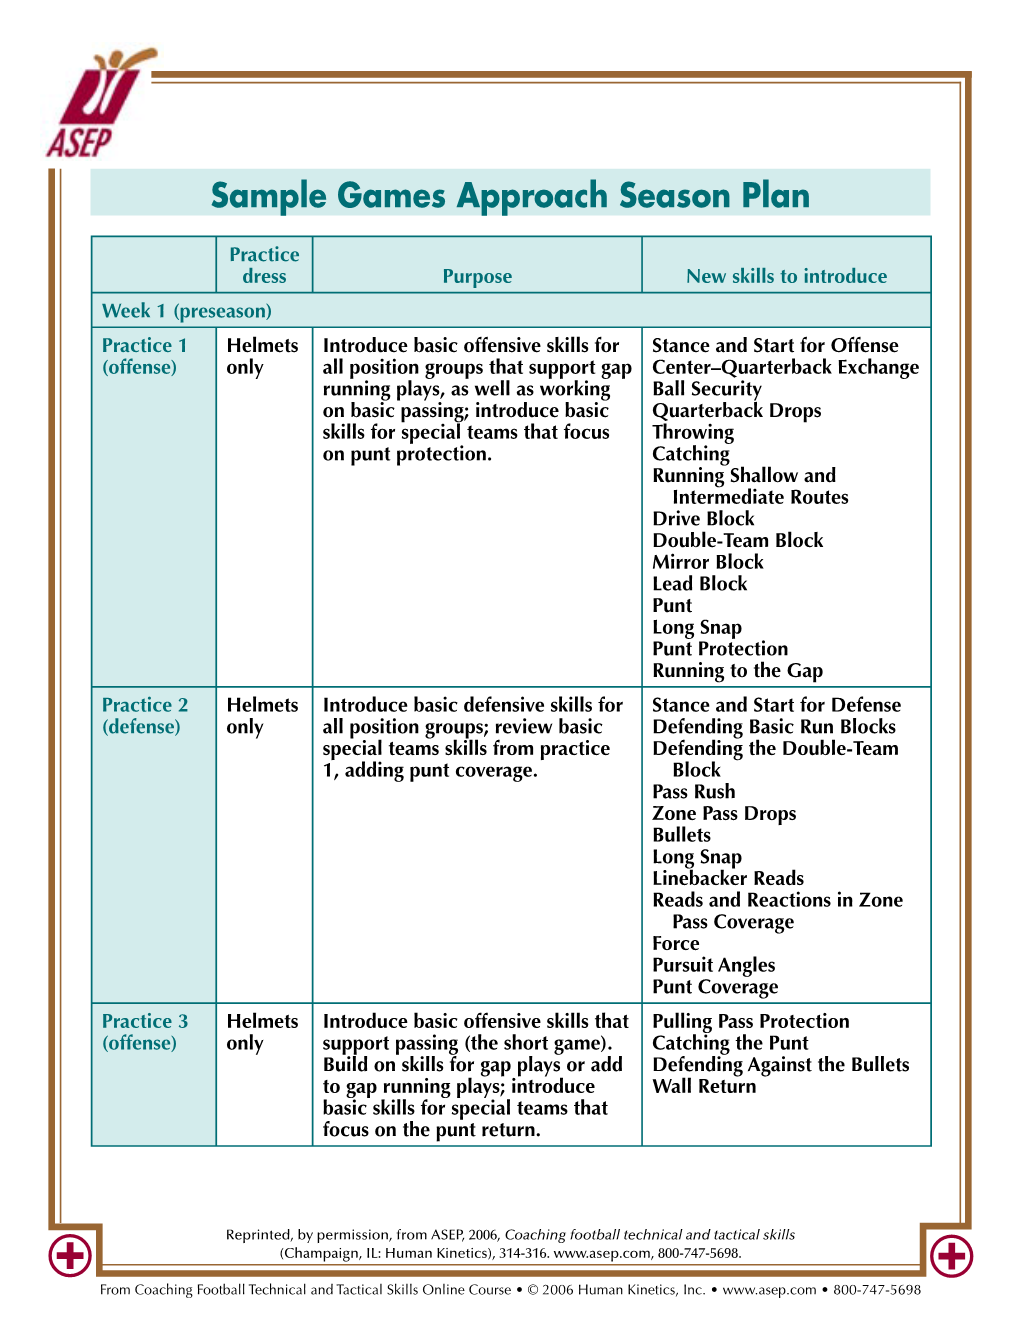 Sample Games Approach Season Plan